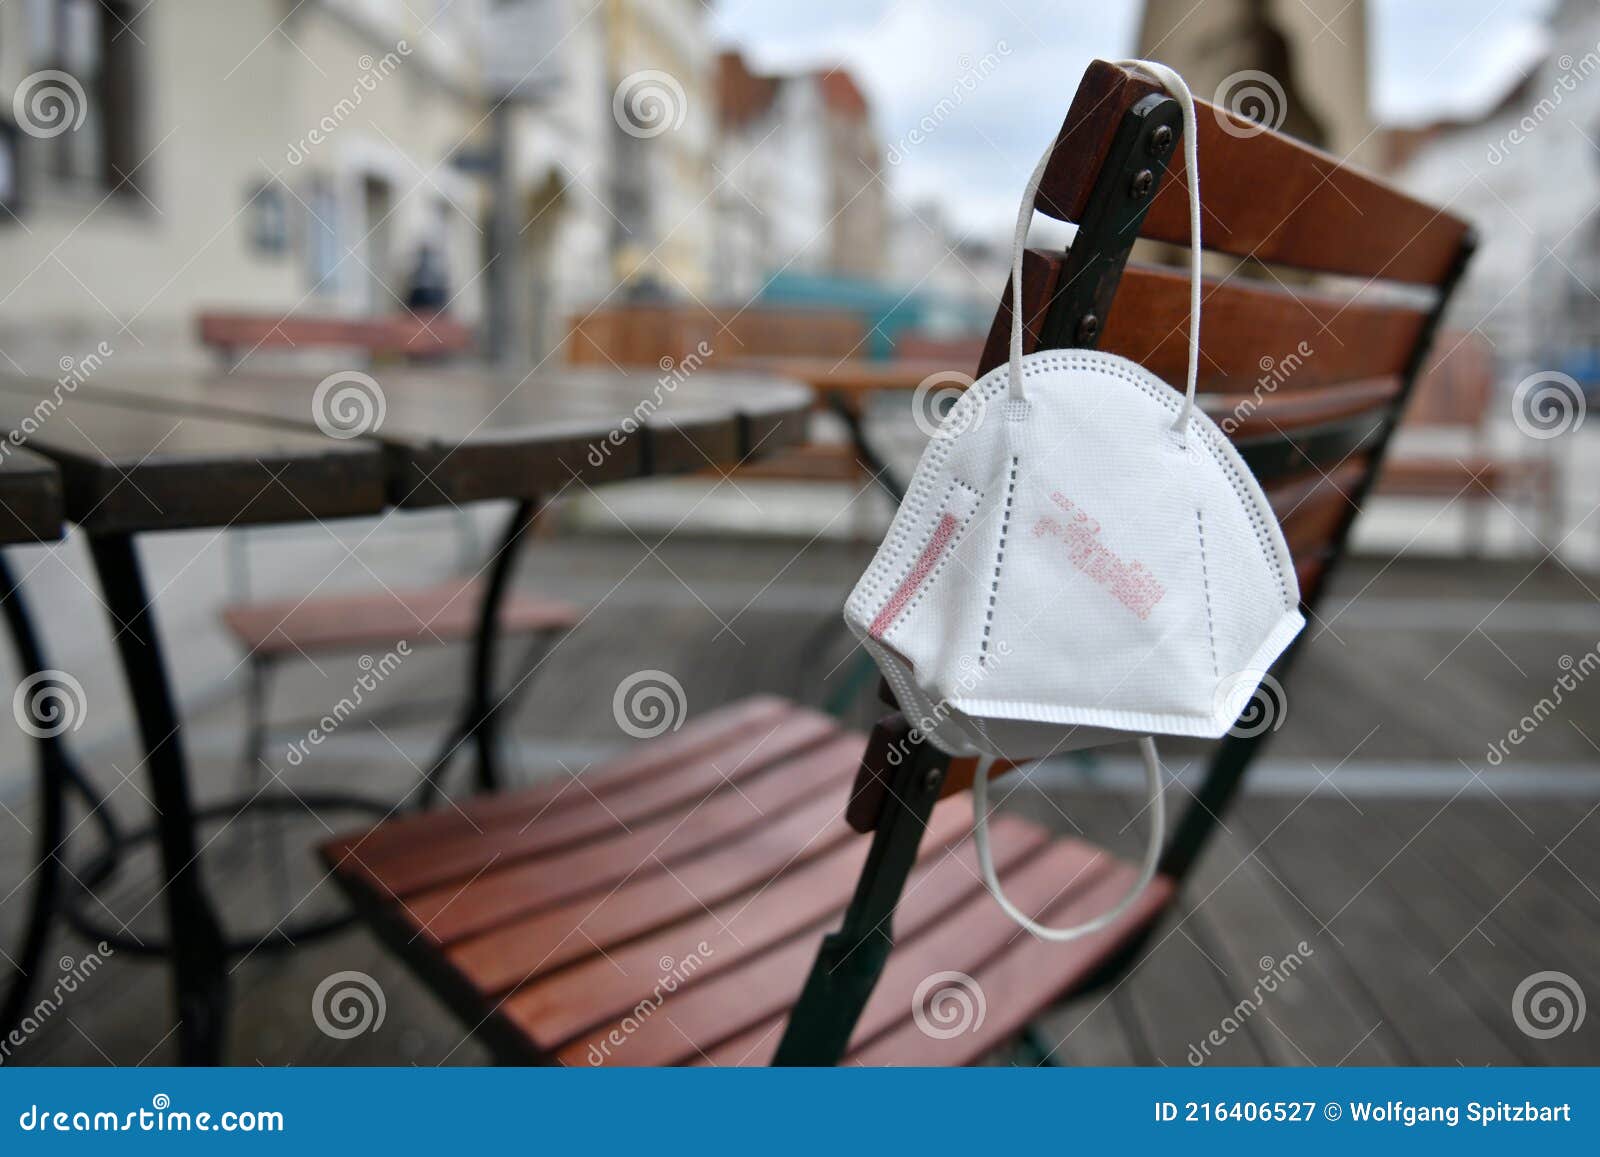 corona crisis - lockdown - ffp2 mask hangs on a chair in an empty beer garden in steyr, austria, europe